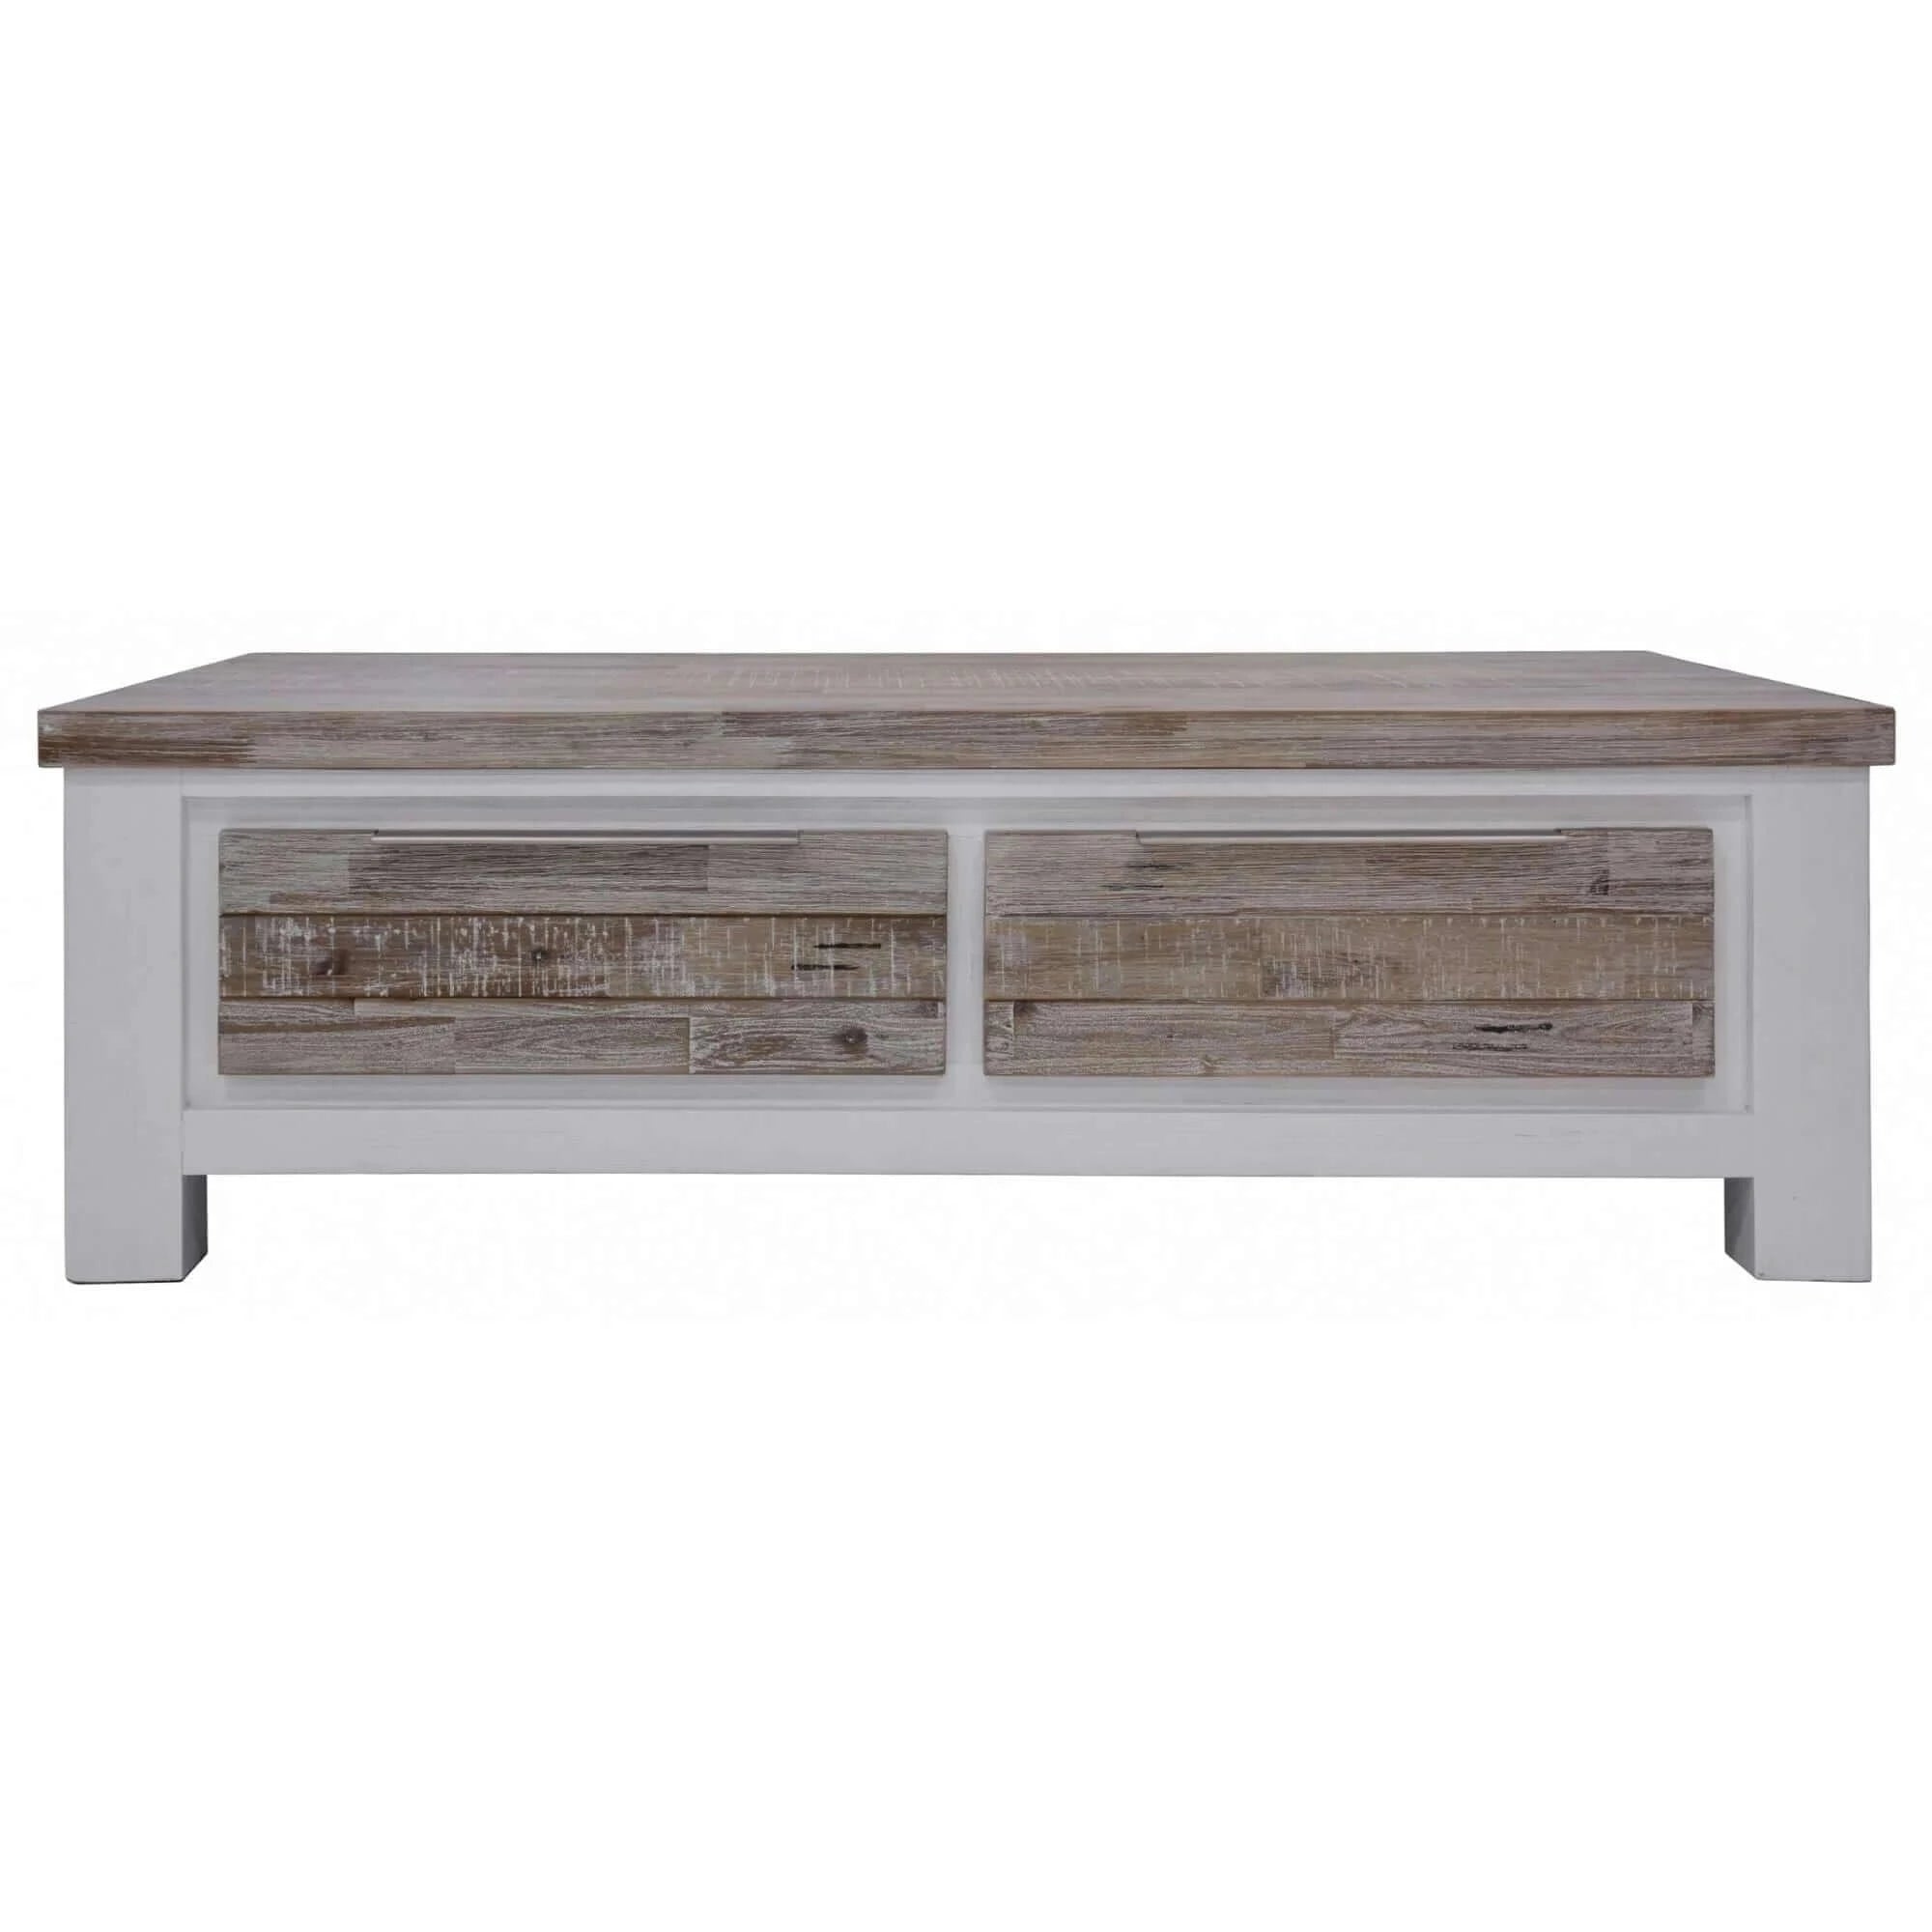 Buy plumeria coffee table 130cm 2 drawer solid acacia timber wood - white brush - upinteriors-Upinteriors